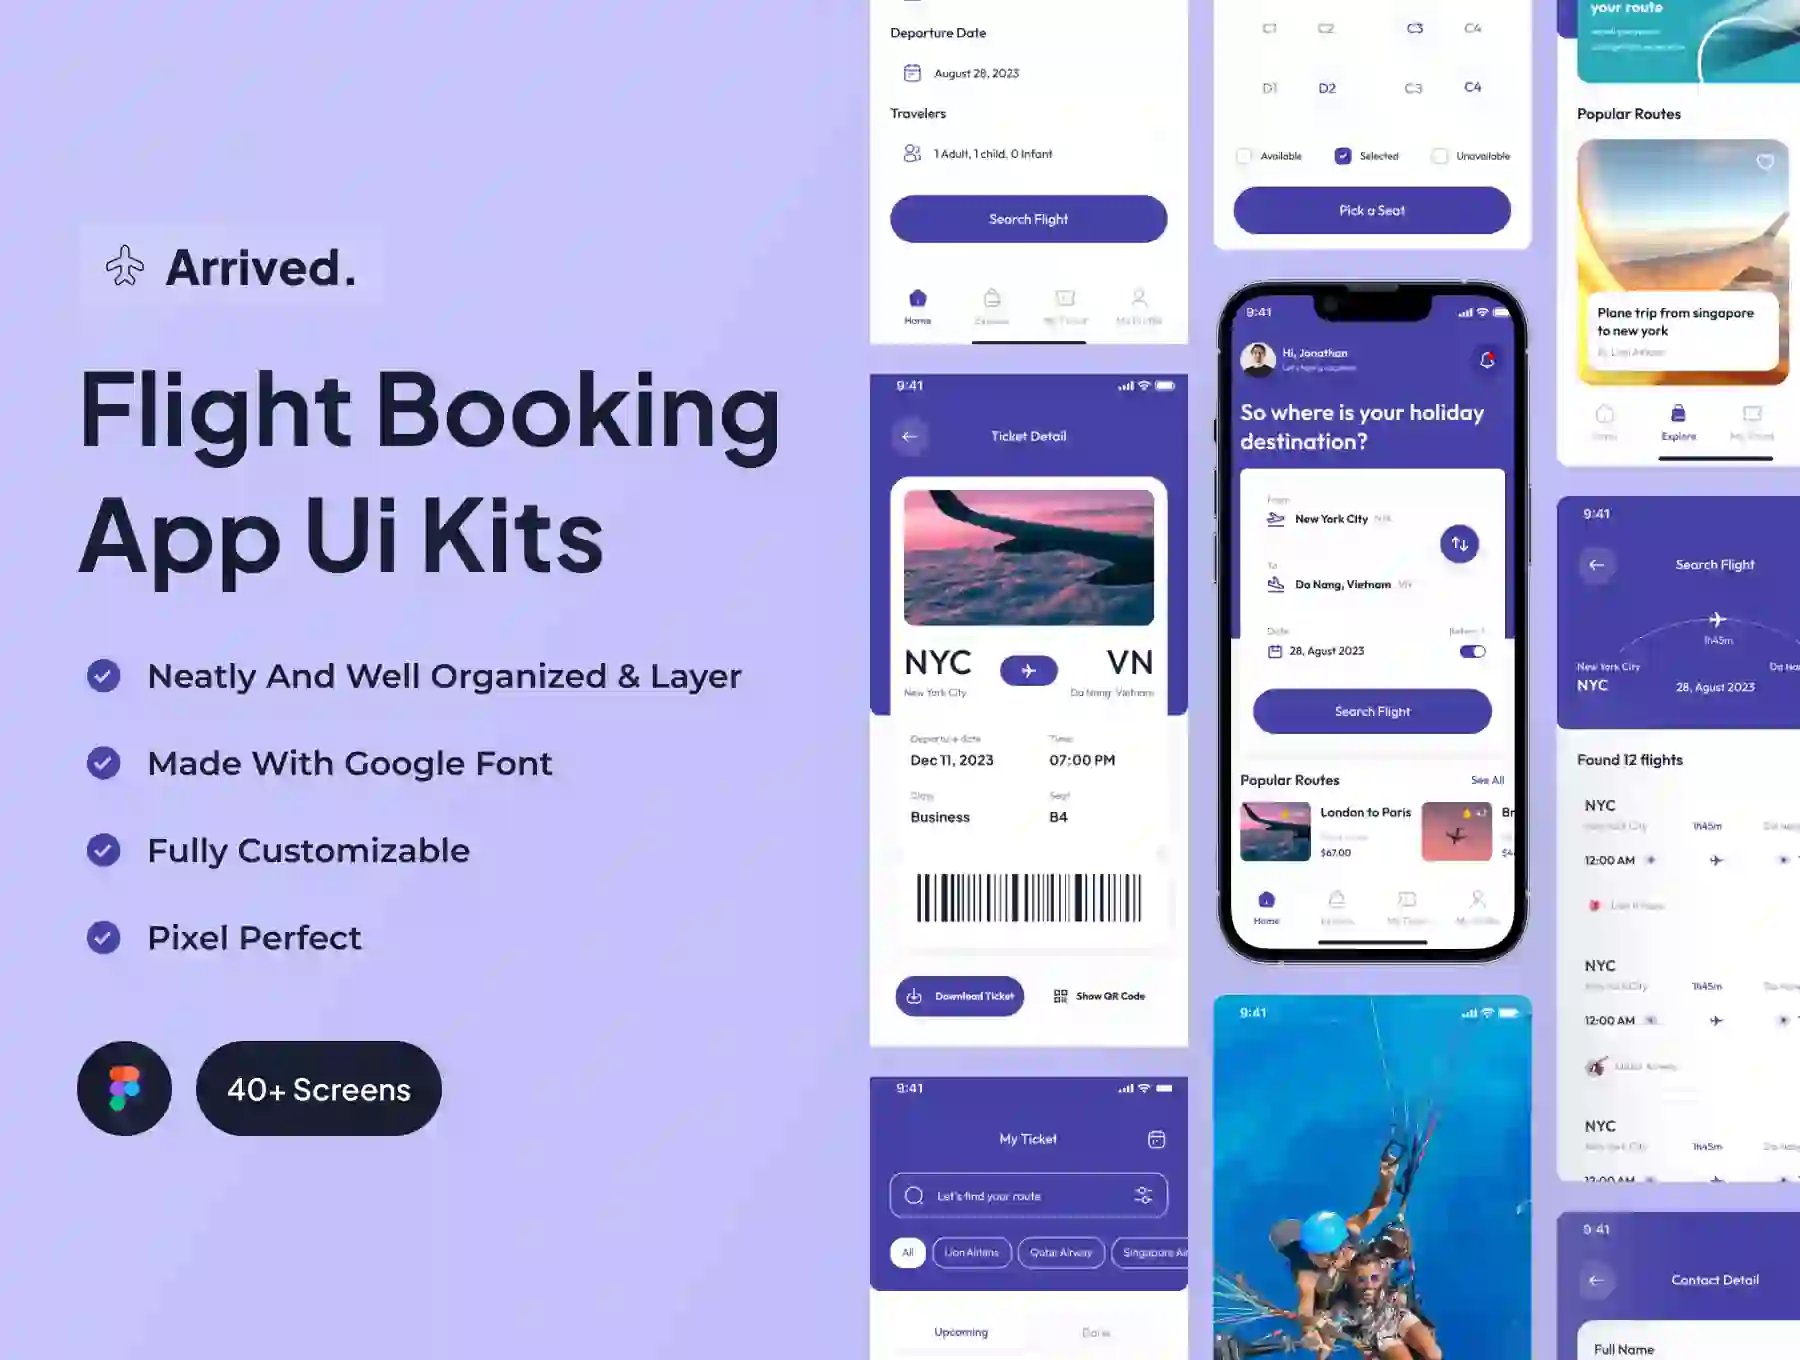 Arrived - Flight Booking App Ui Kits